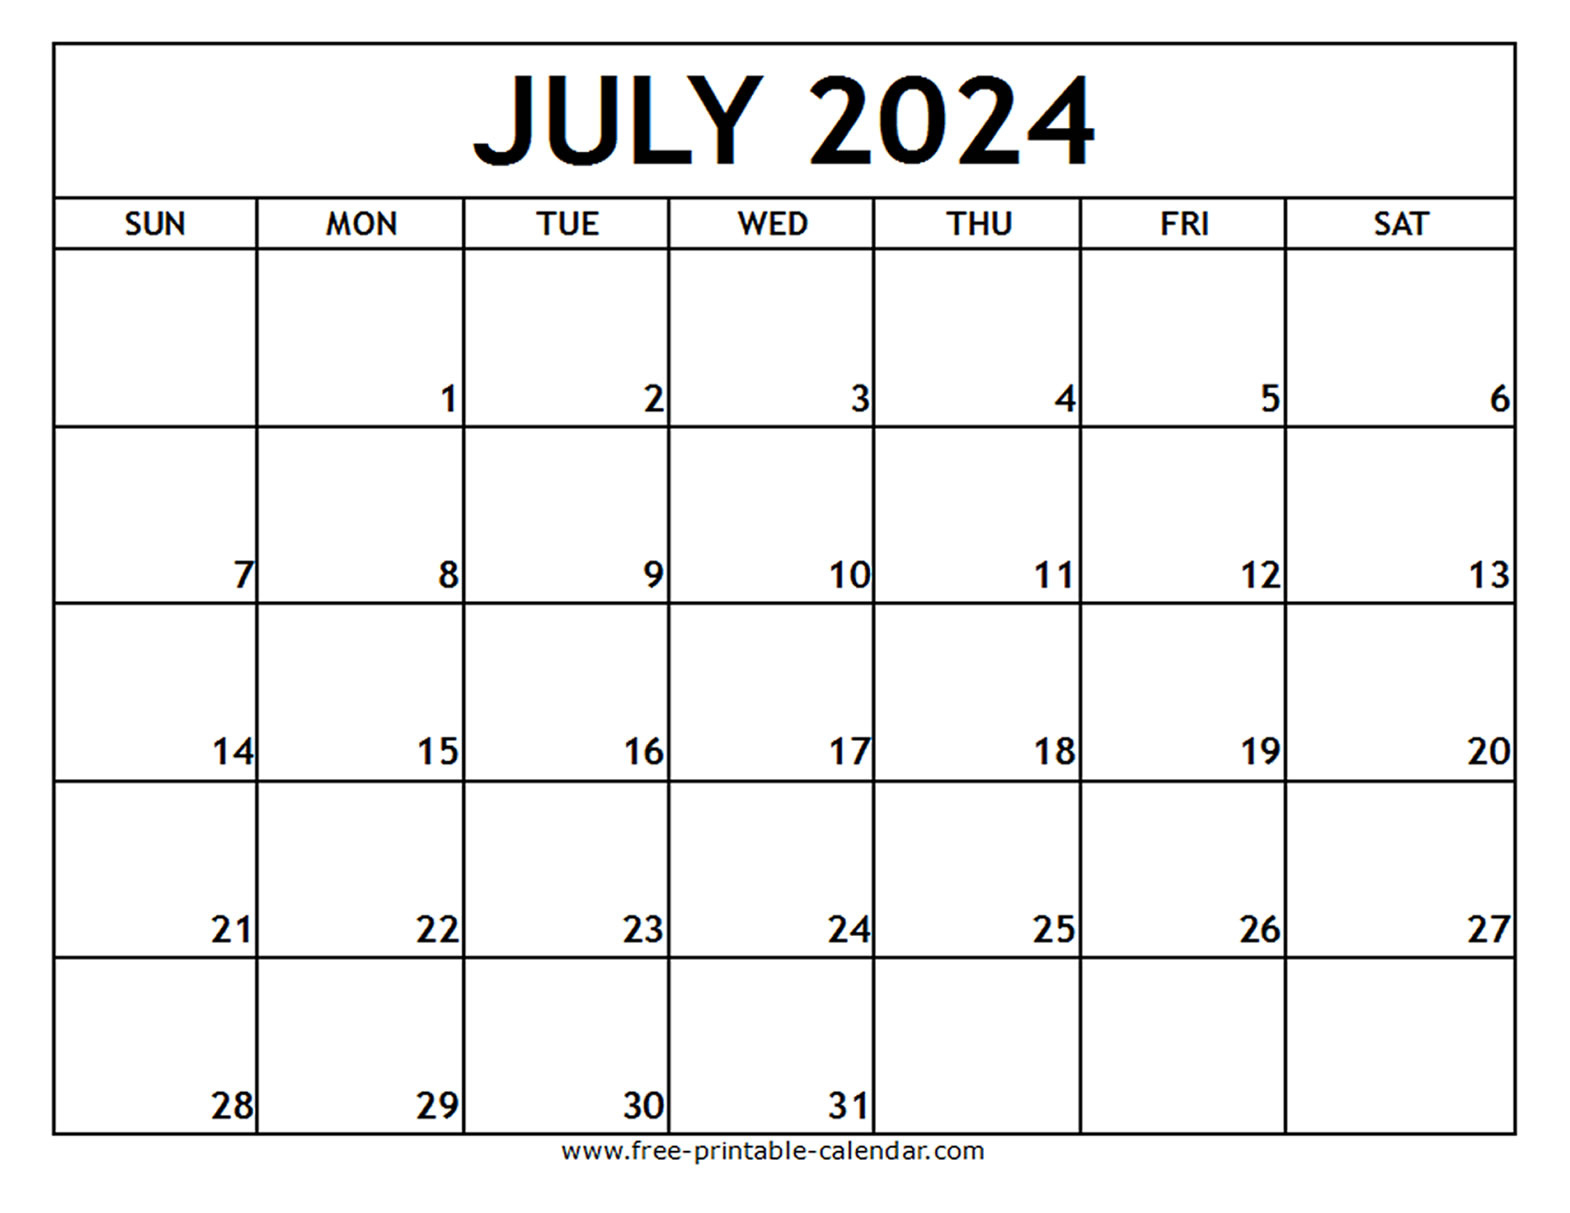 July 2024 Printable Calendar - Free-Printable-Calendar with regard to July Calendar Free Print 2024